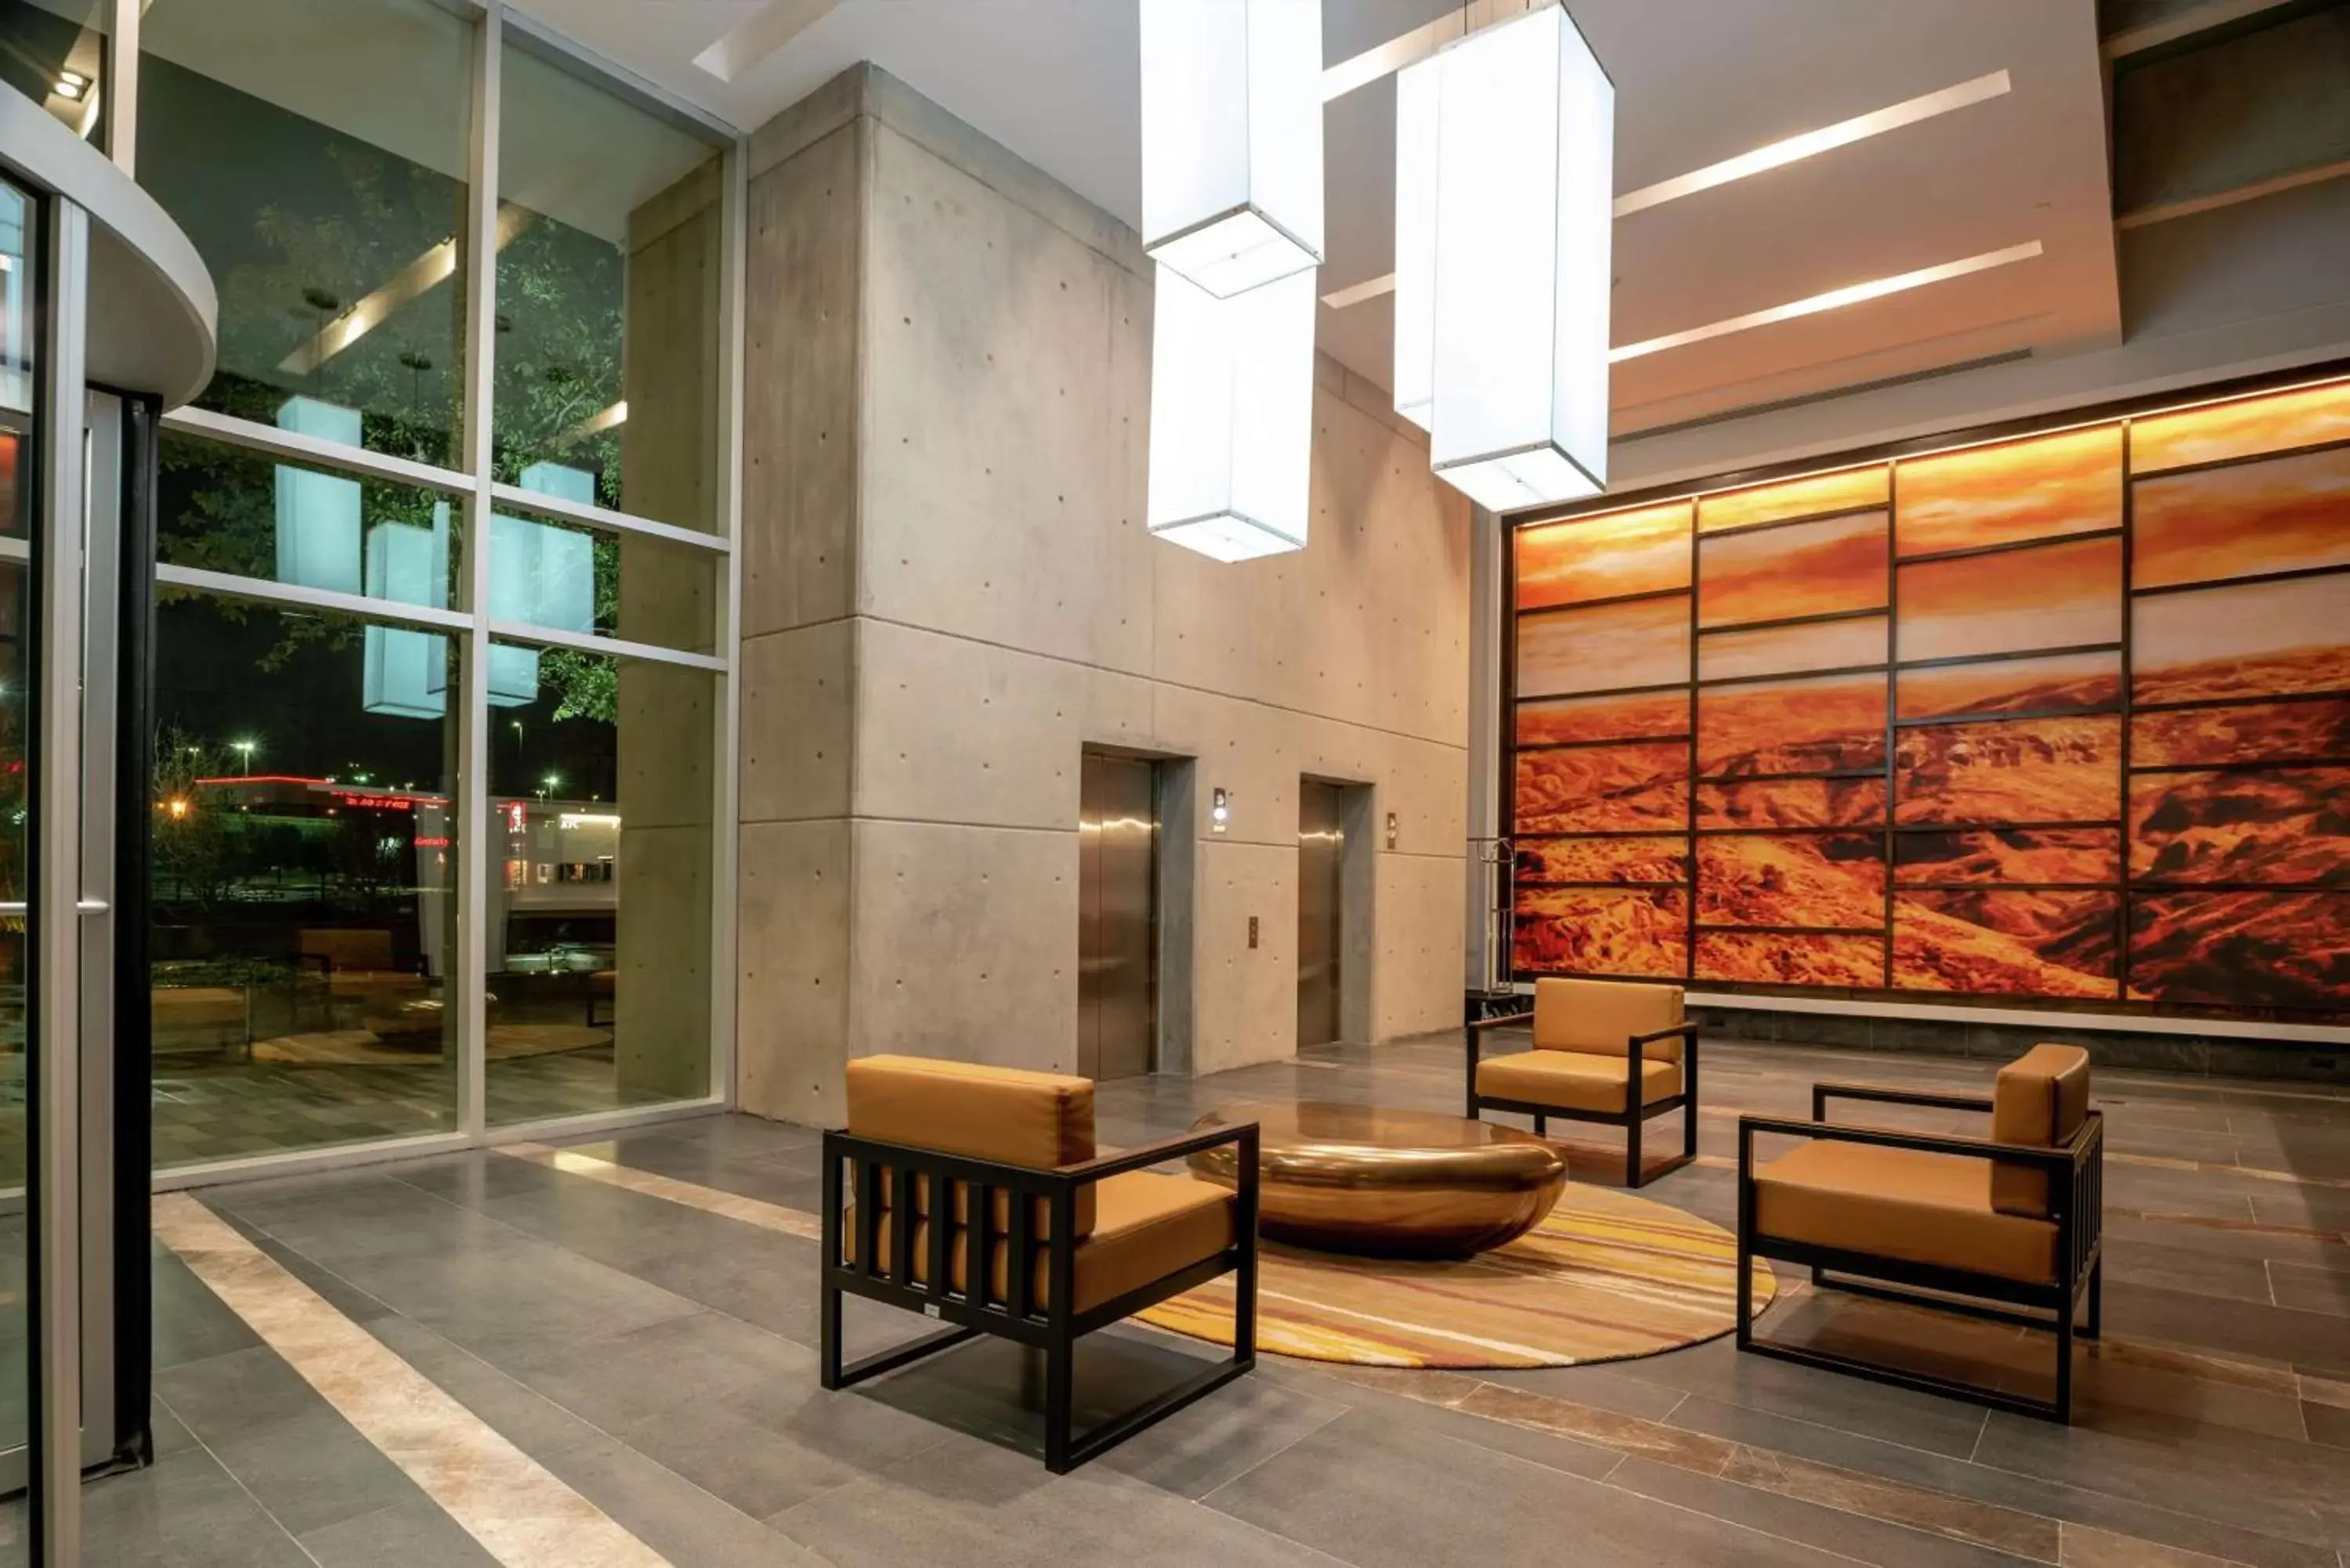 Lobby or reception in Hilton Garden Inn Chihuahua